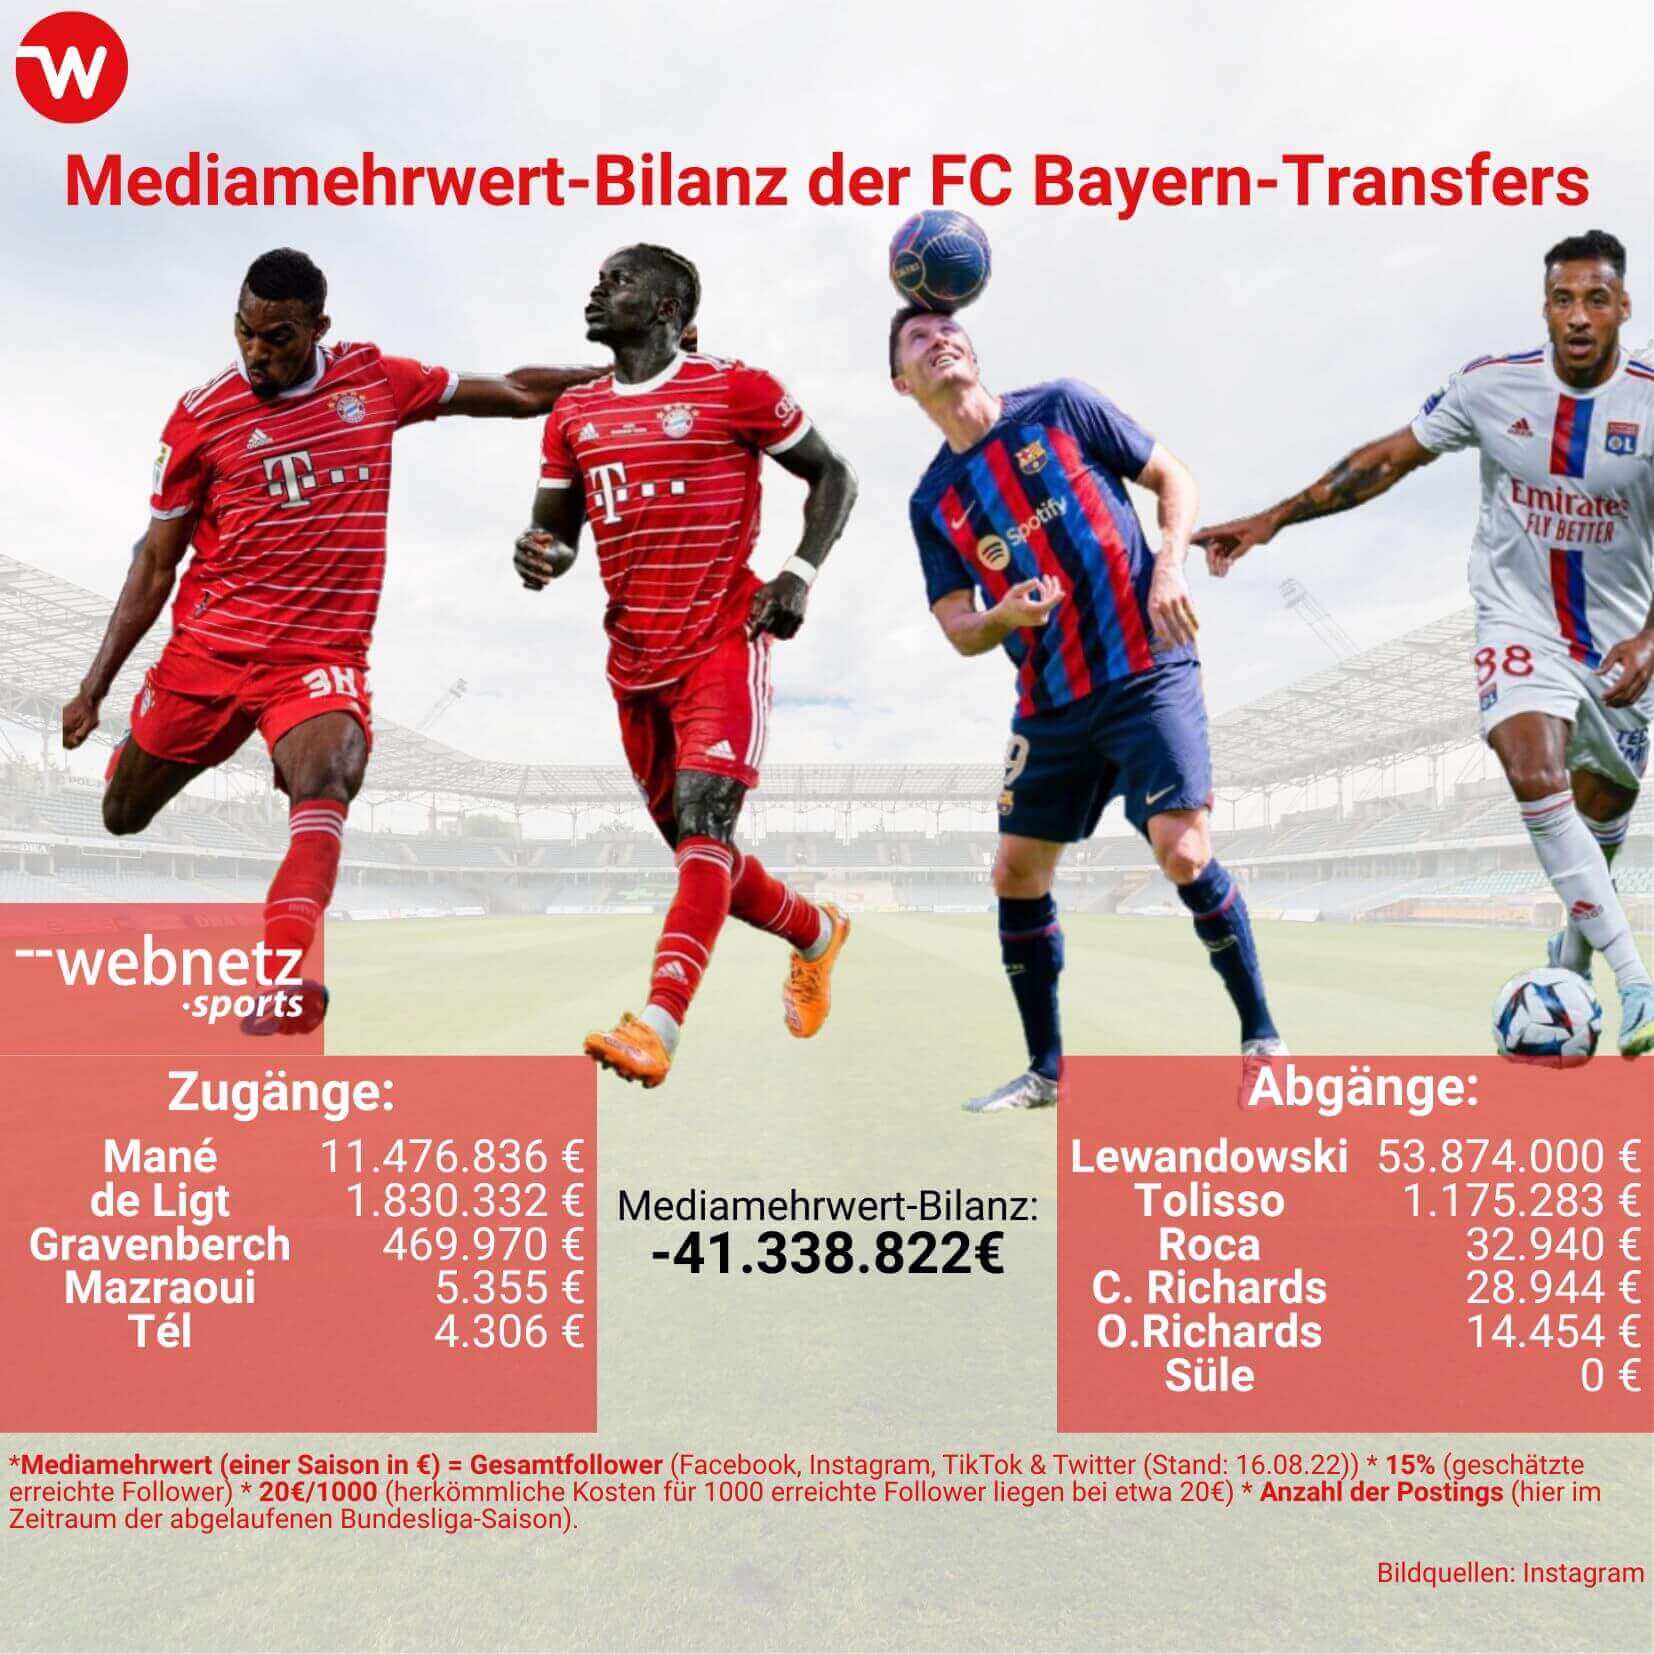 FC Bayern Mediamehrwert-Bilanz